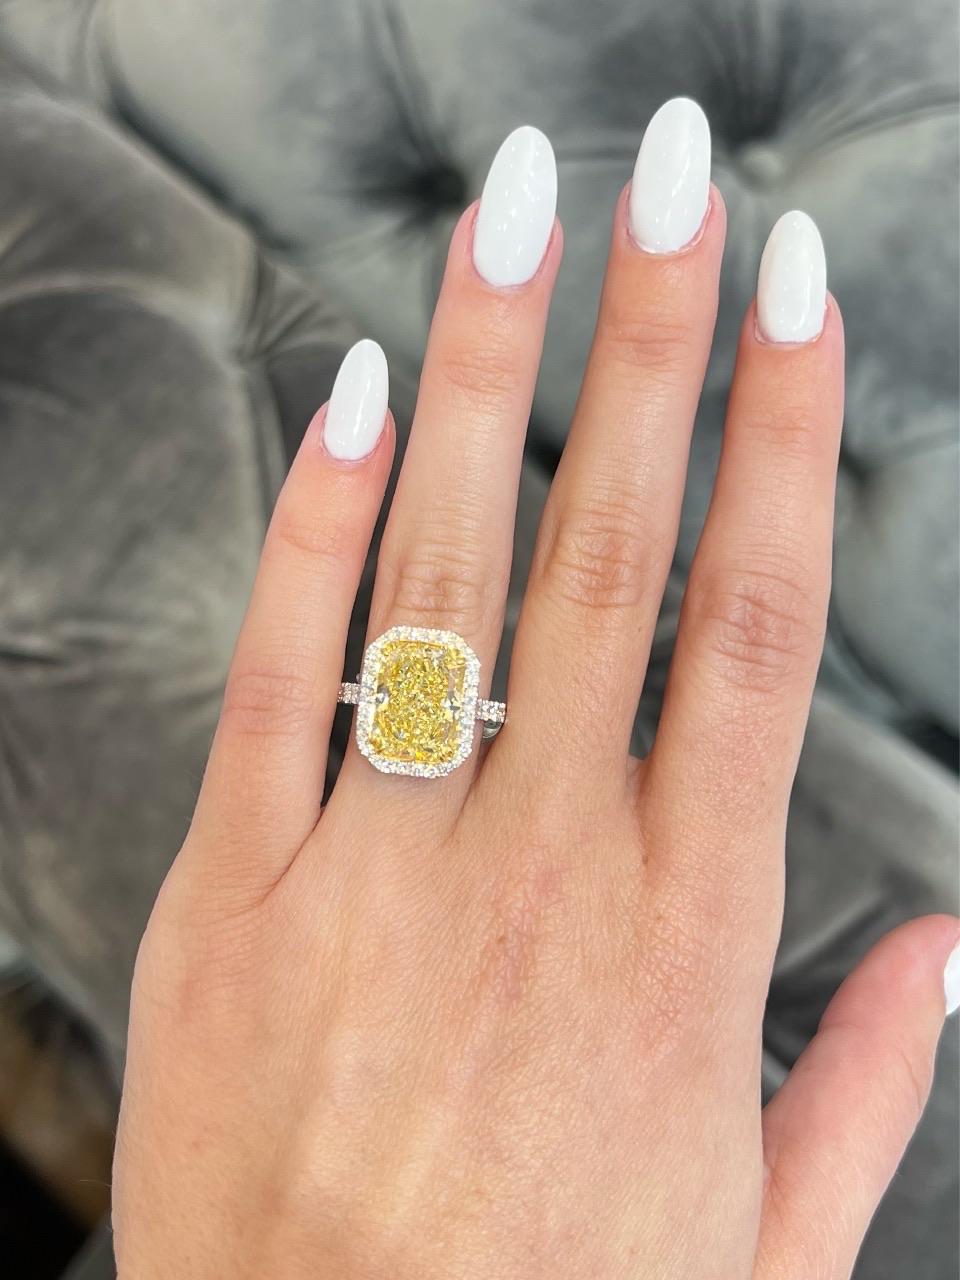 David Rosenberg 6.54 Ct Radiant Light Yellow GIA Diamond Engagement Ring For Sale 5